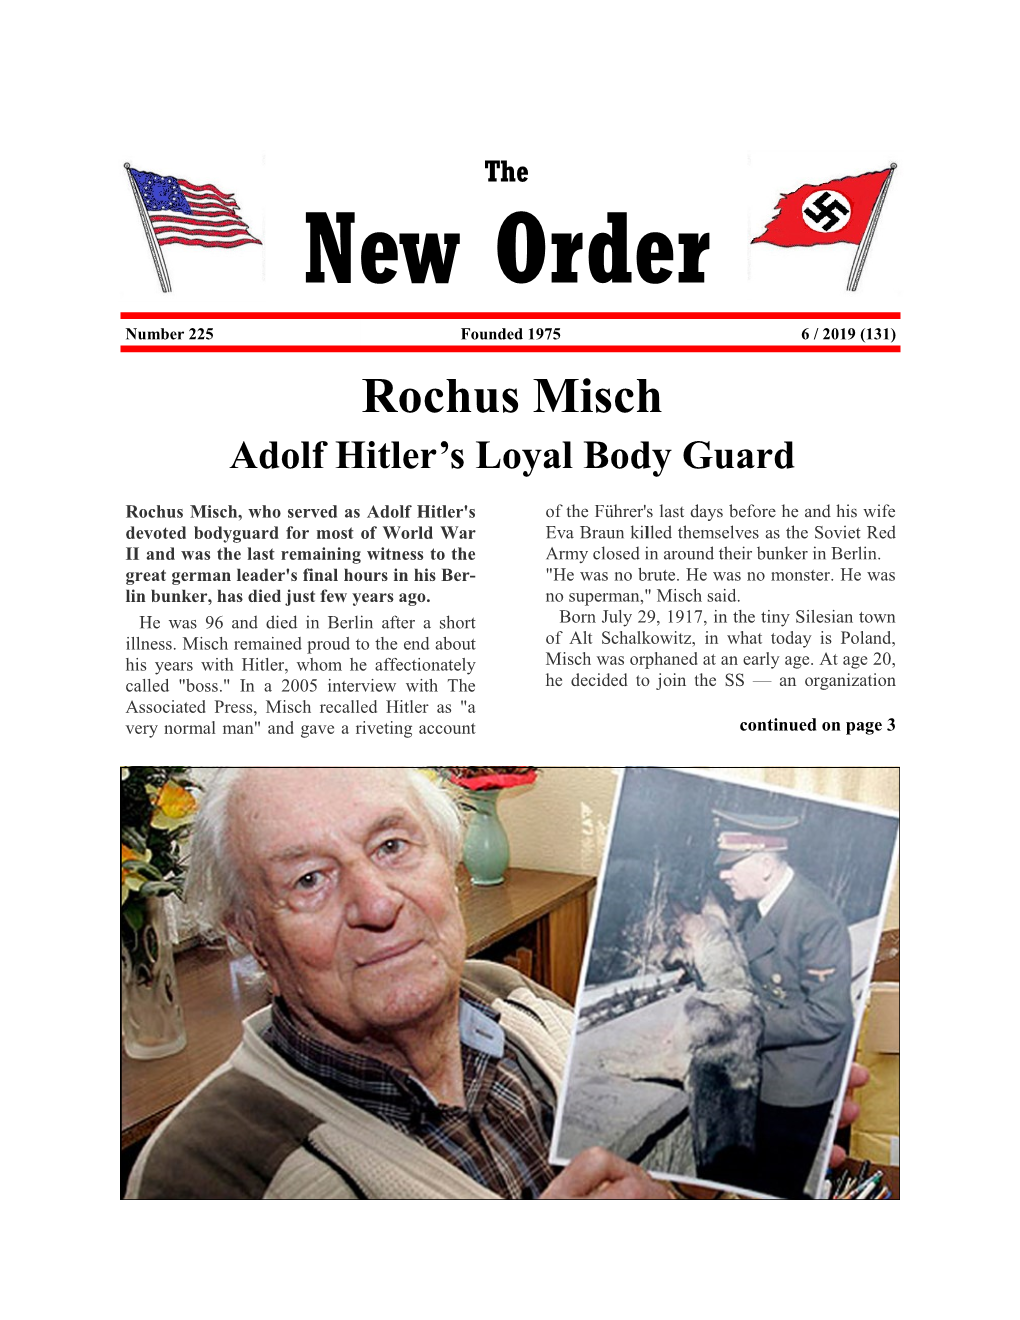 The New Order Rochus Misch Adolf Hitler's Loyal Body Guard